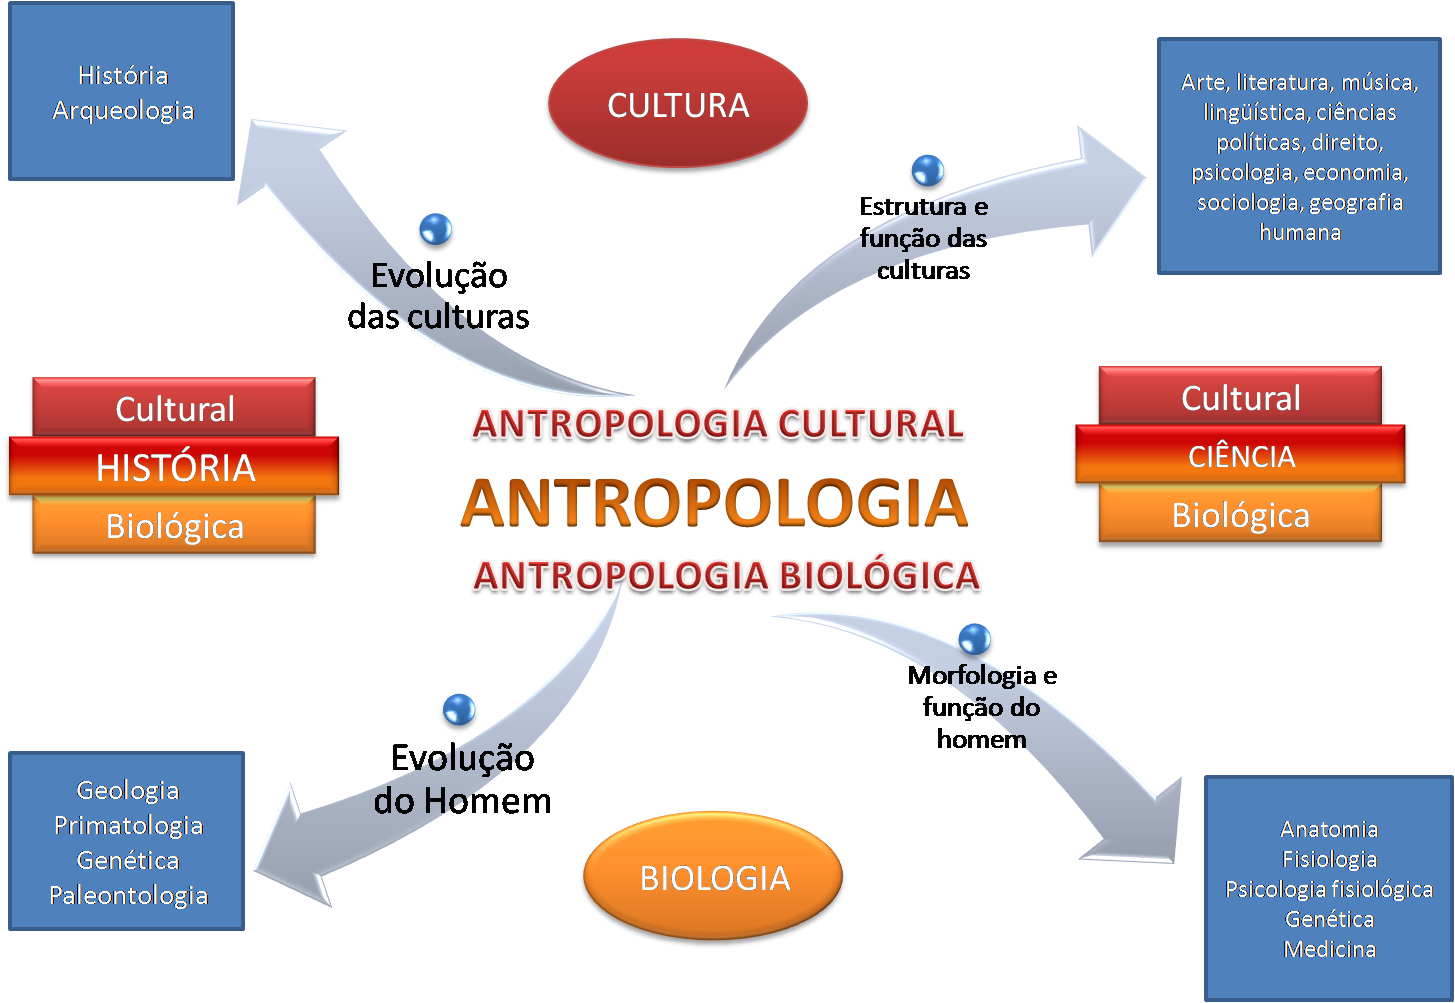 Linguística  Uma (in)certa antropologia